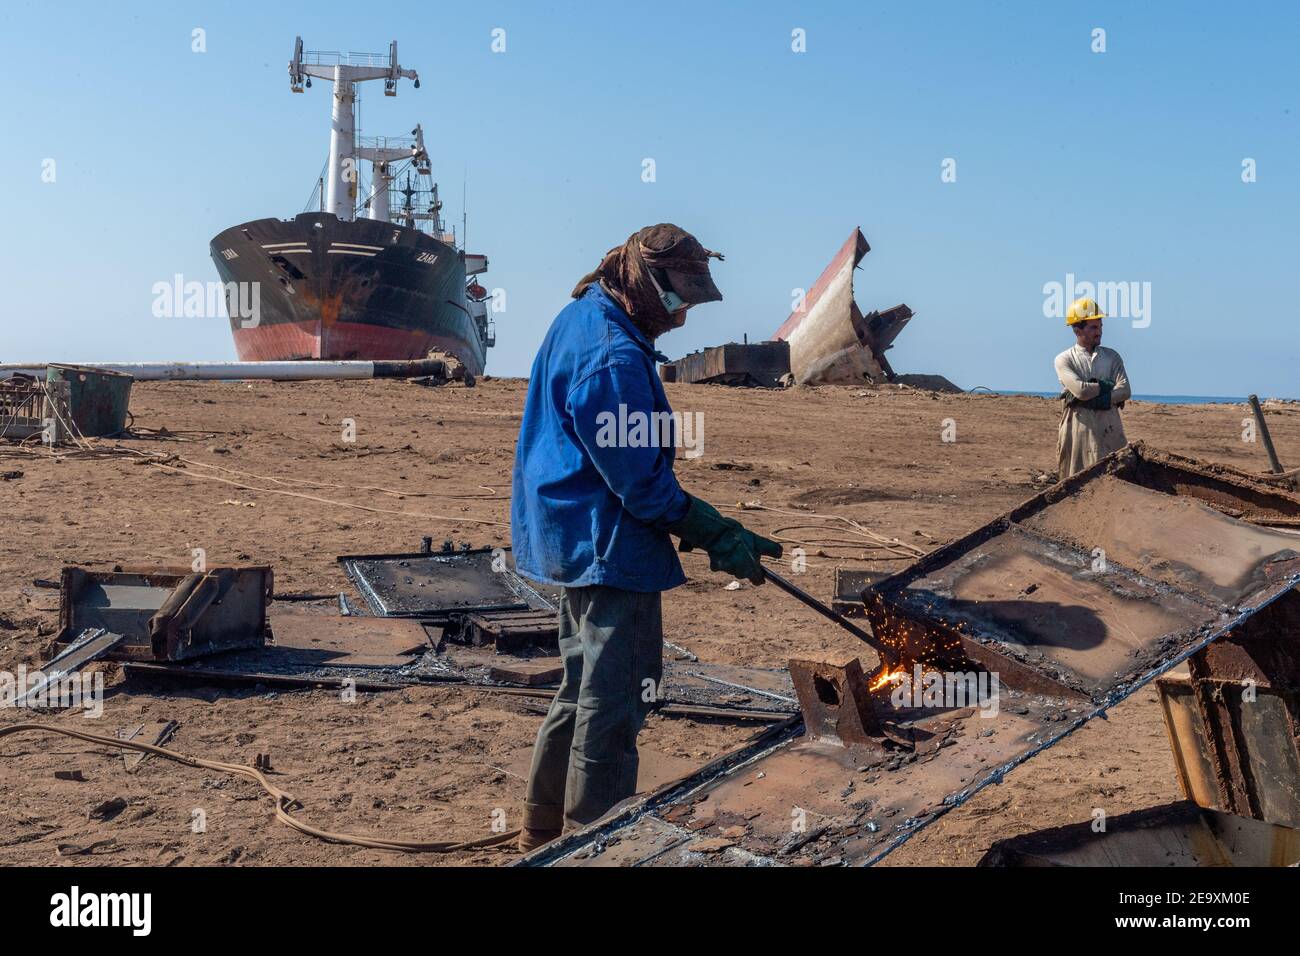 Workers breaking up ships, Gadani ship-breaking yard, located across a 10 km long beachfront, Balochistan, Pakistan. Stock Photo